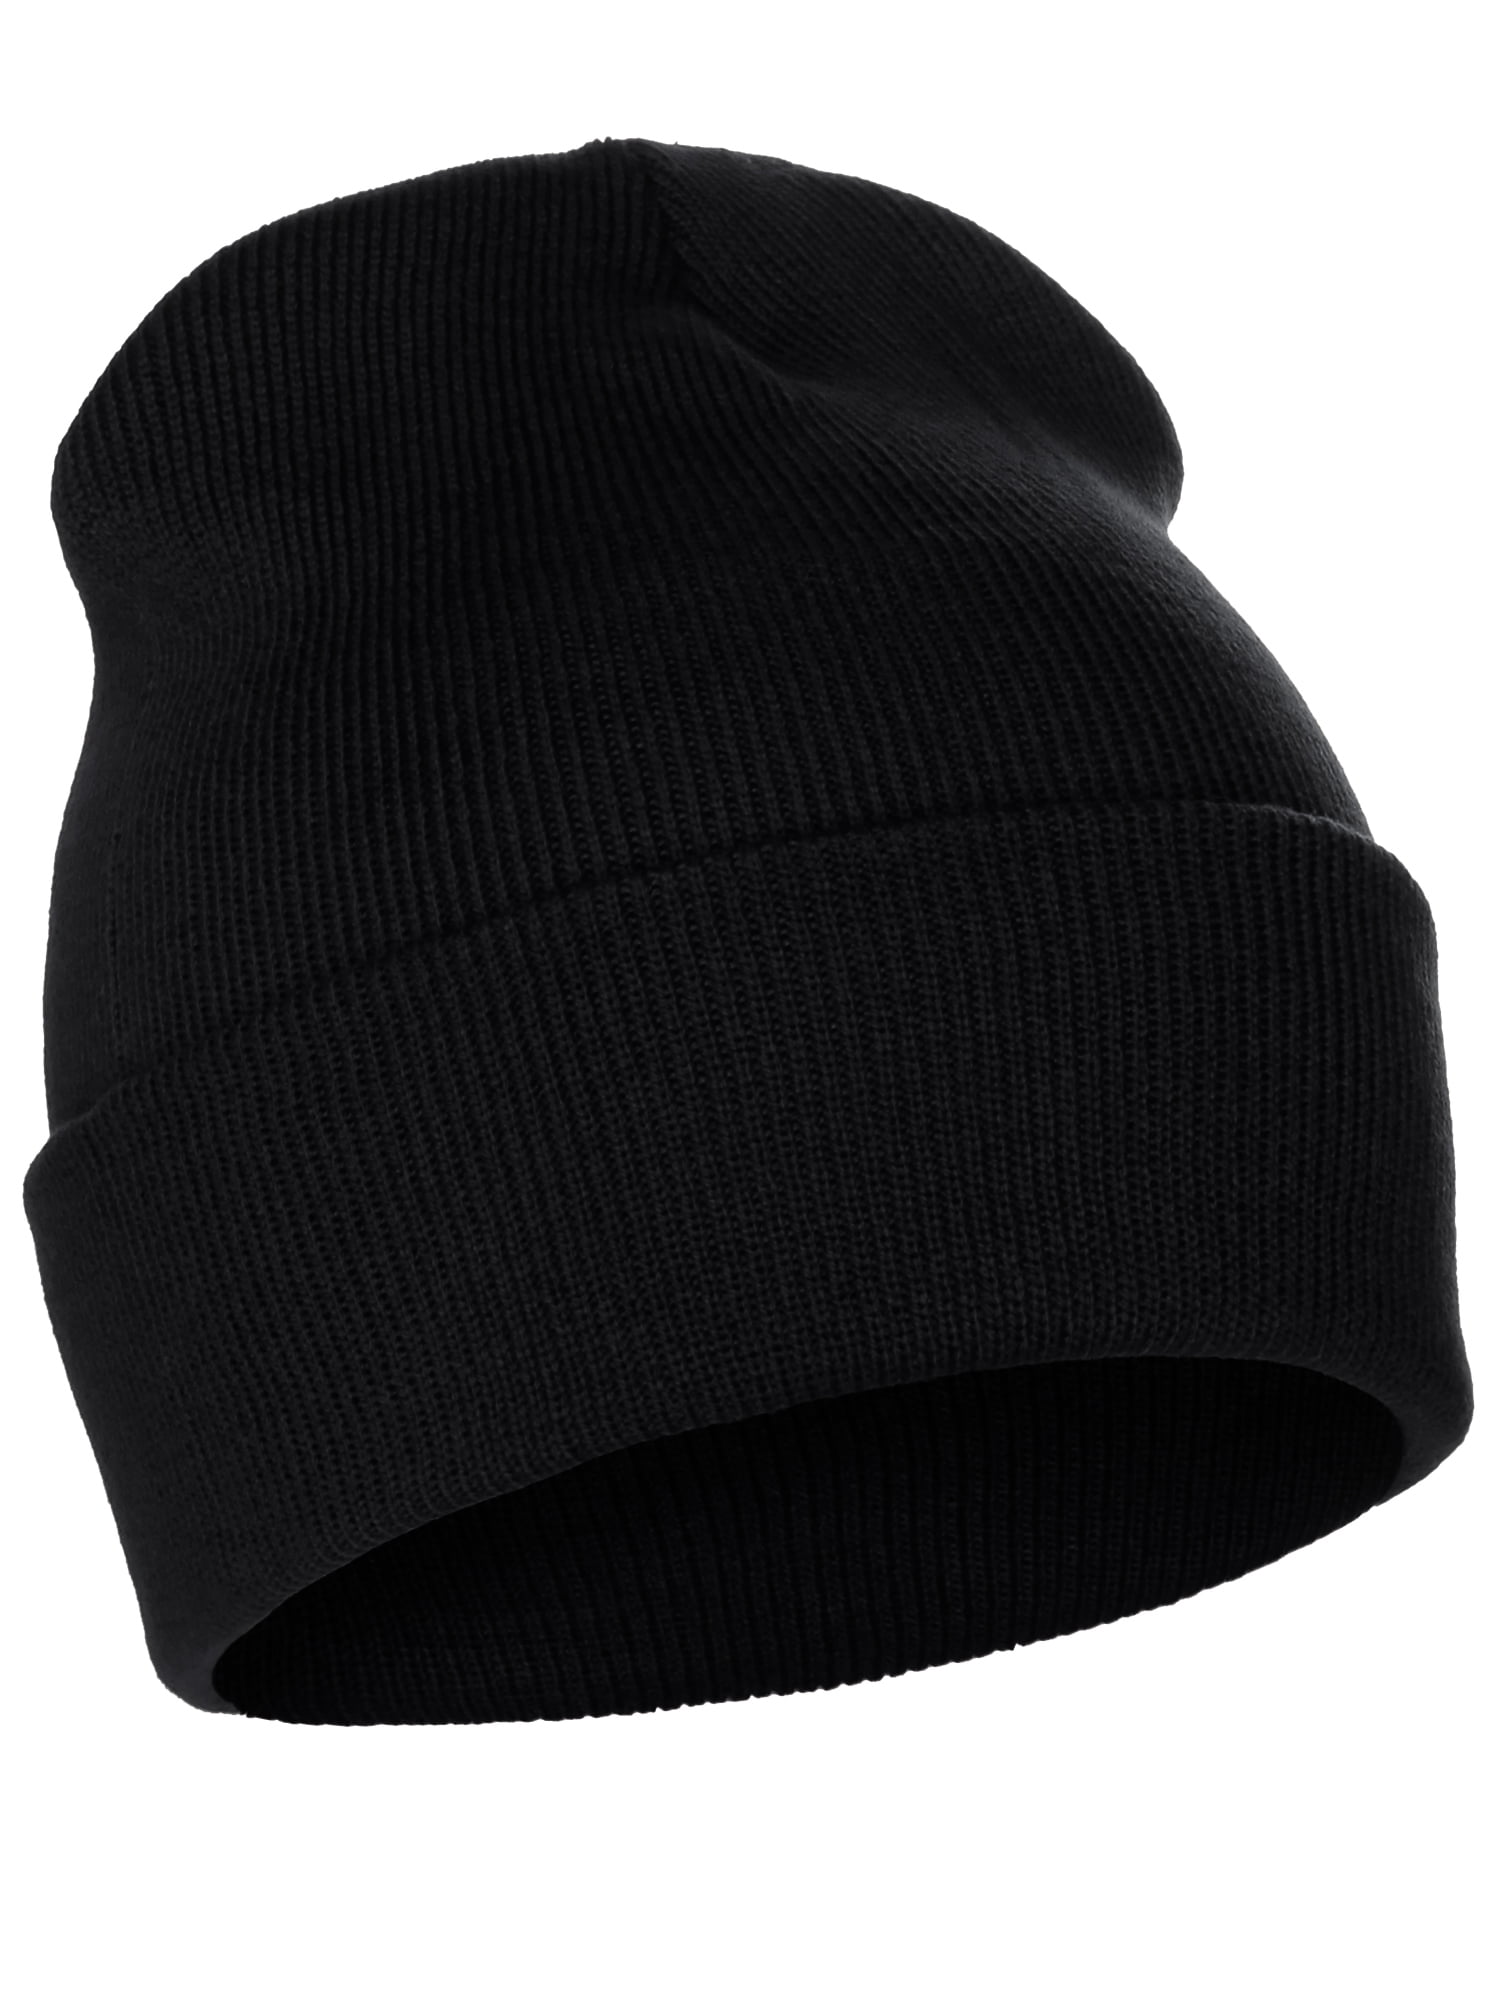 Classic Plain Cuffed Beanie Winter Knit Hat Skully Cap, Black - Walmart ...